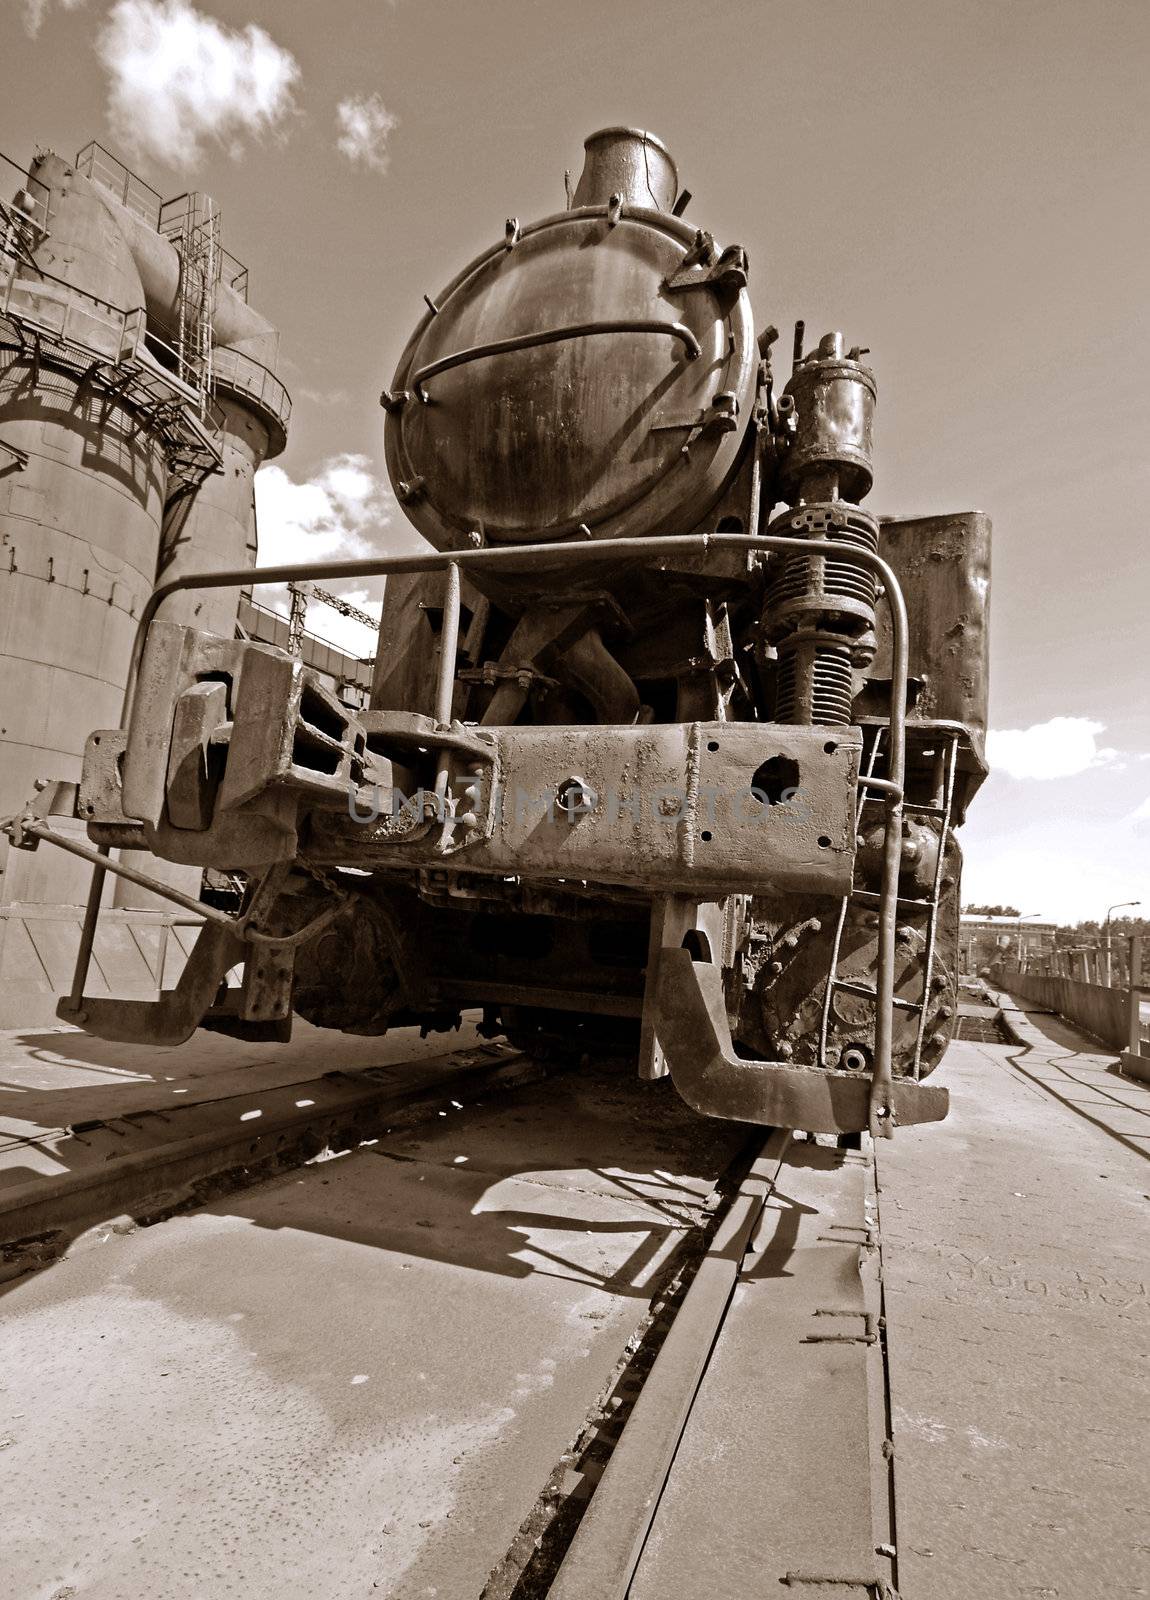 the old Steam locomotive photo